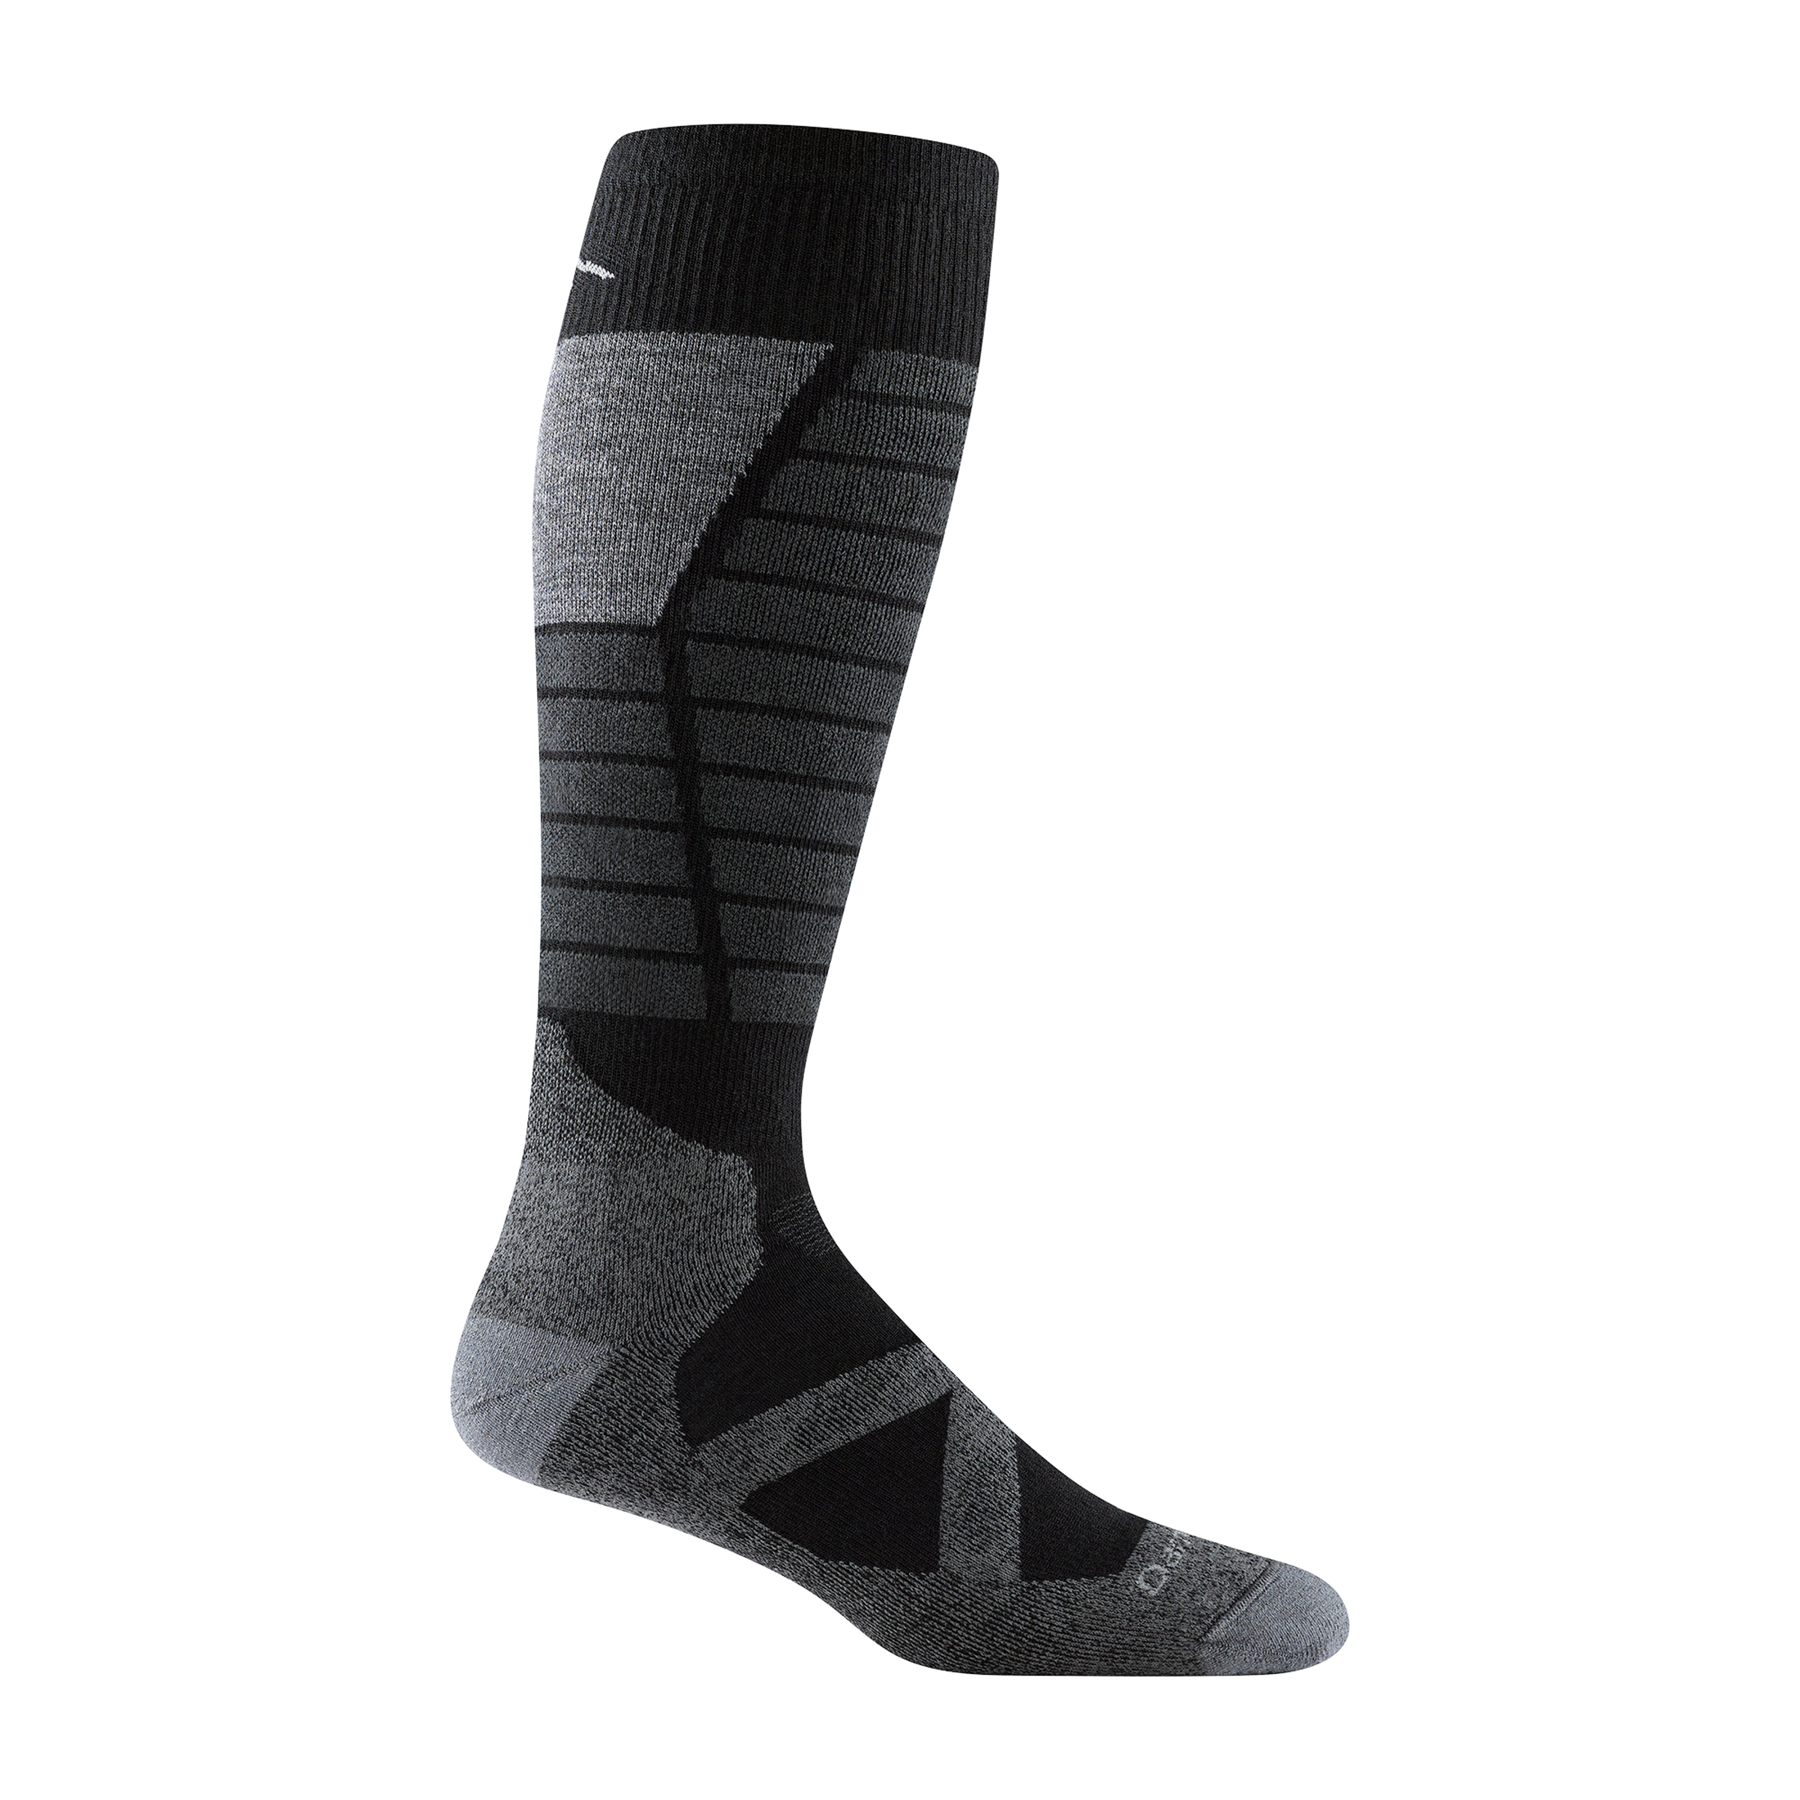 Merino Wool Ski Socks, Cold Weather Socks for Snowboarding, Snow, Winter,  Thermal Knee-high Warm Socks, Hunting X-Large Black Dark Grey Grey (3 Pairs)